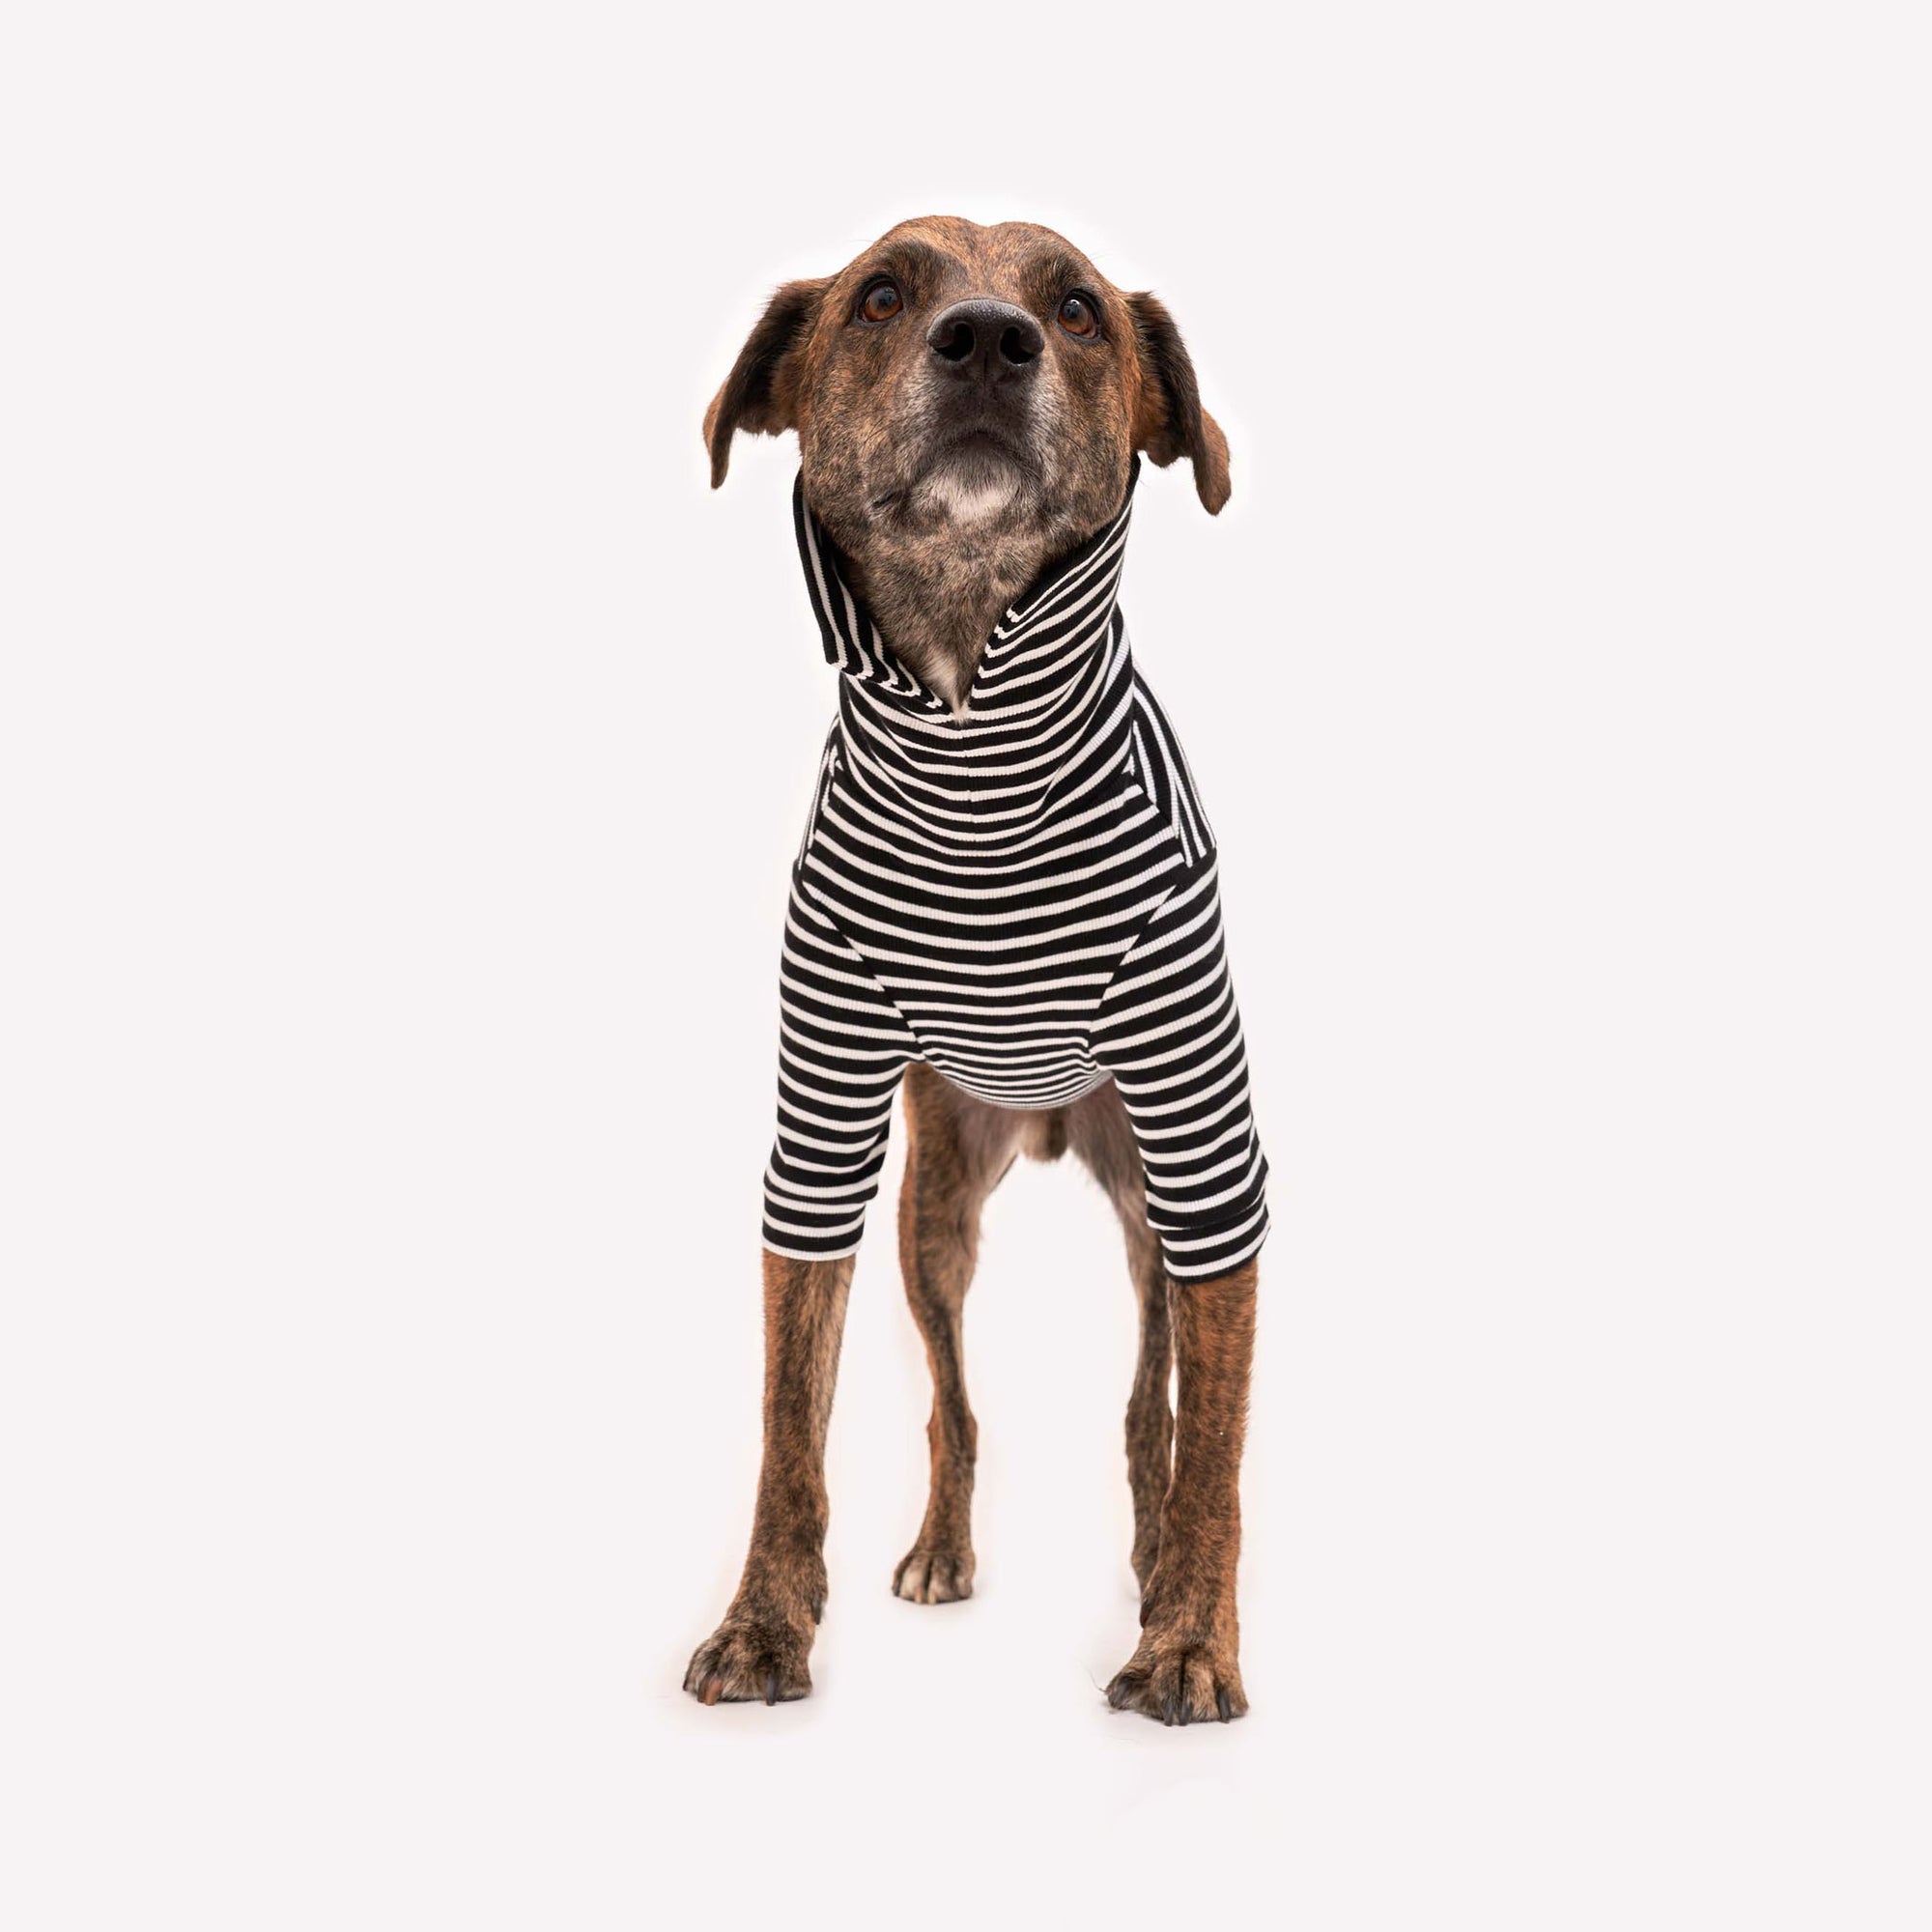 Attentive brindle dog models a snug black and white striped turtleneck shirt with a heart emblem, showcasing pet fashion.